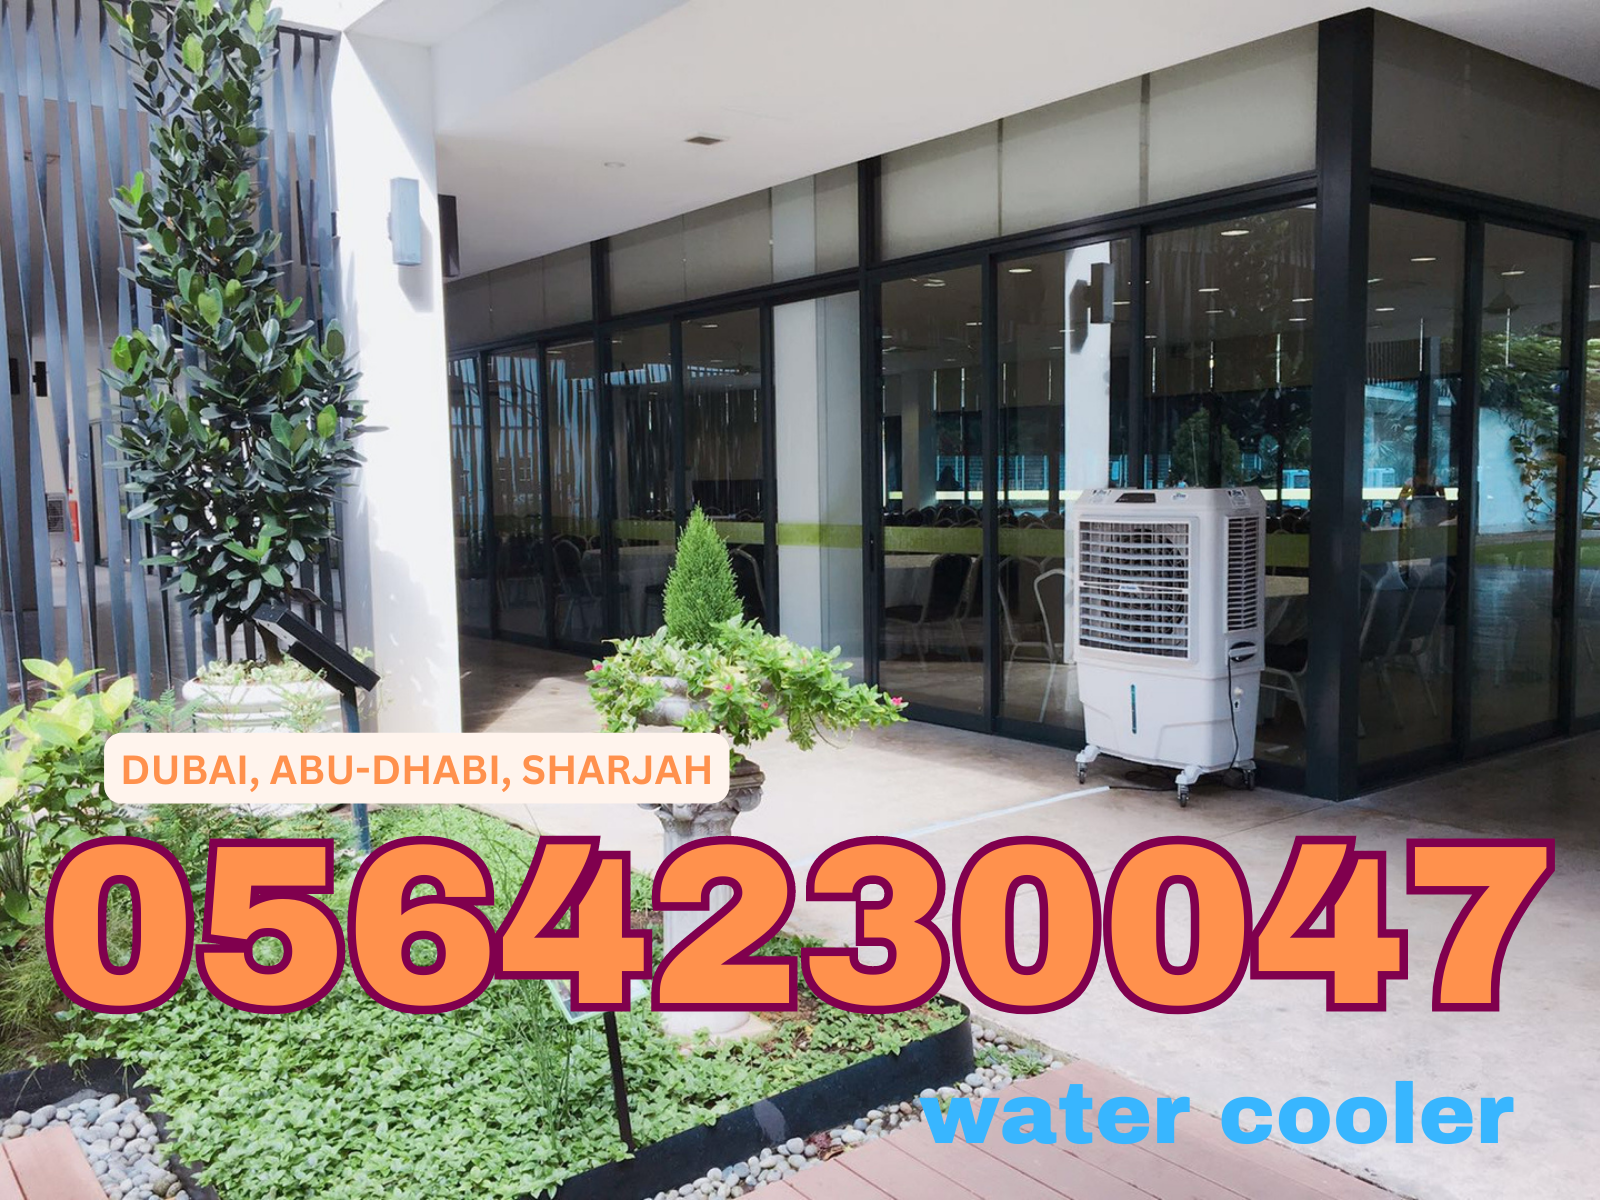 Outdoor air cooler rentals UAE